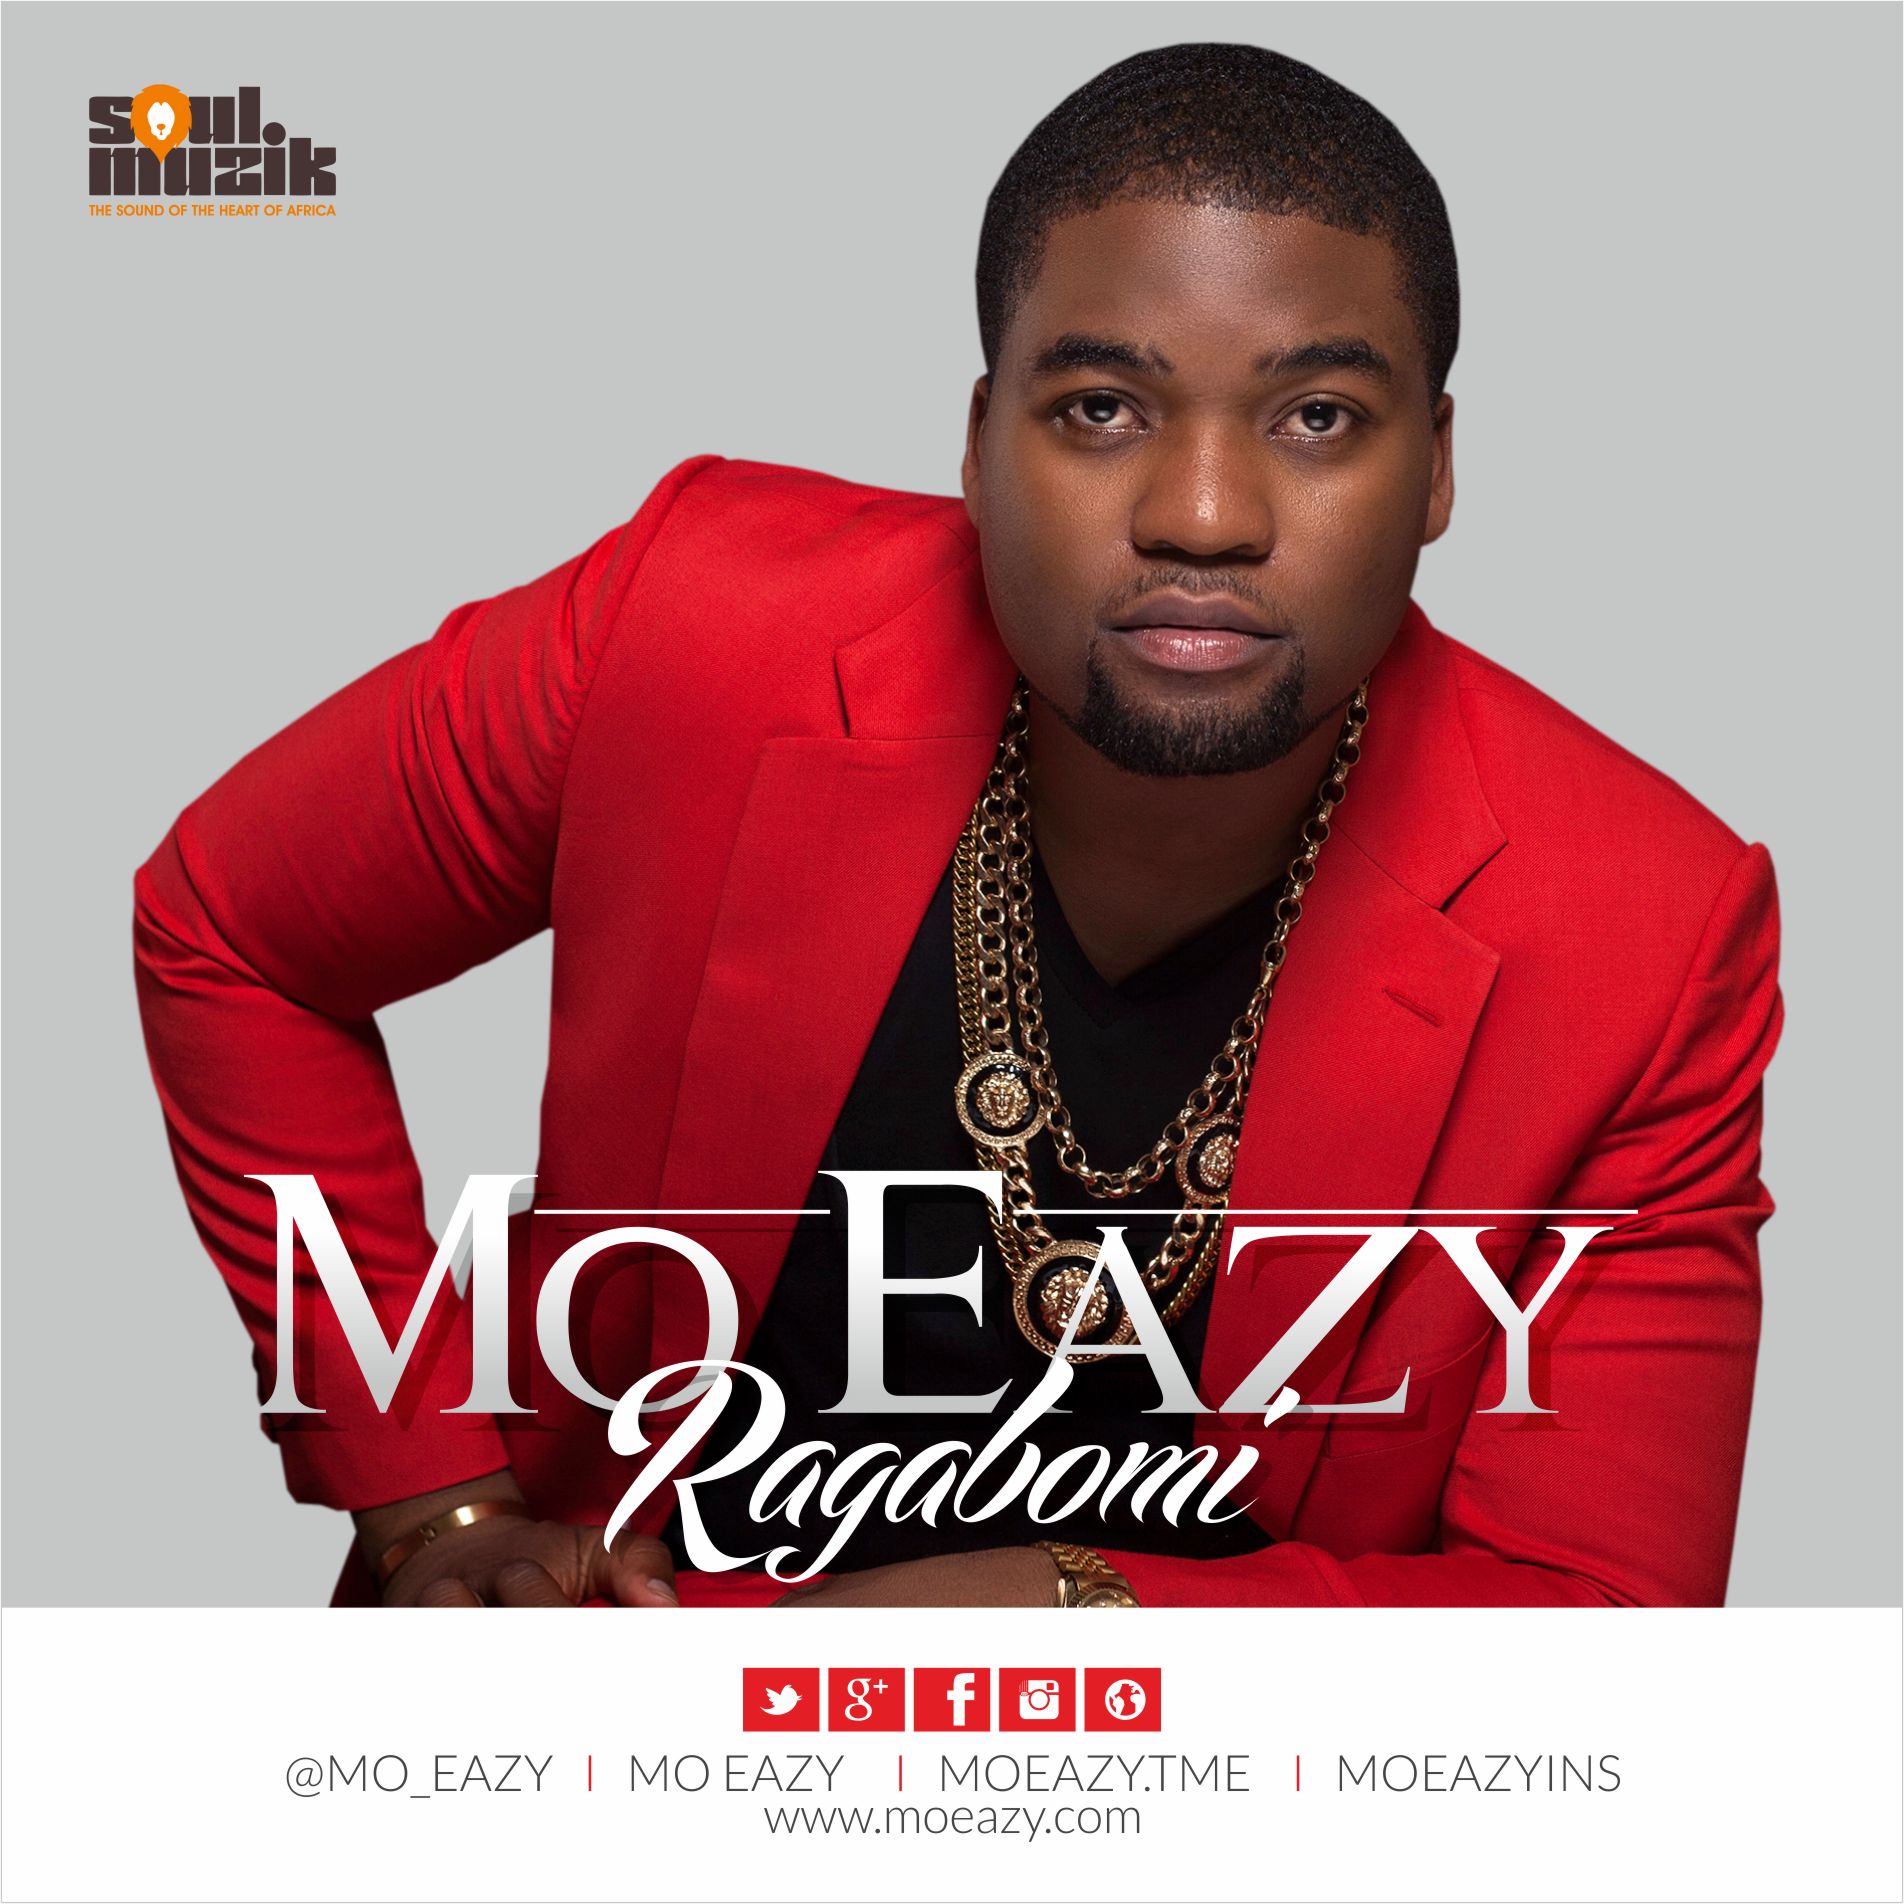 Ragabomi Moeazy Single Release Online Art 7